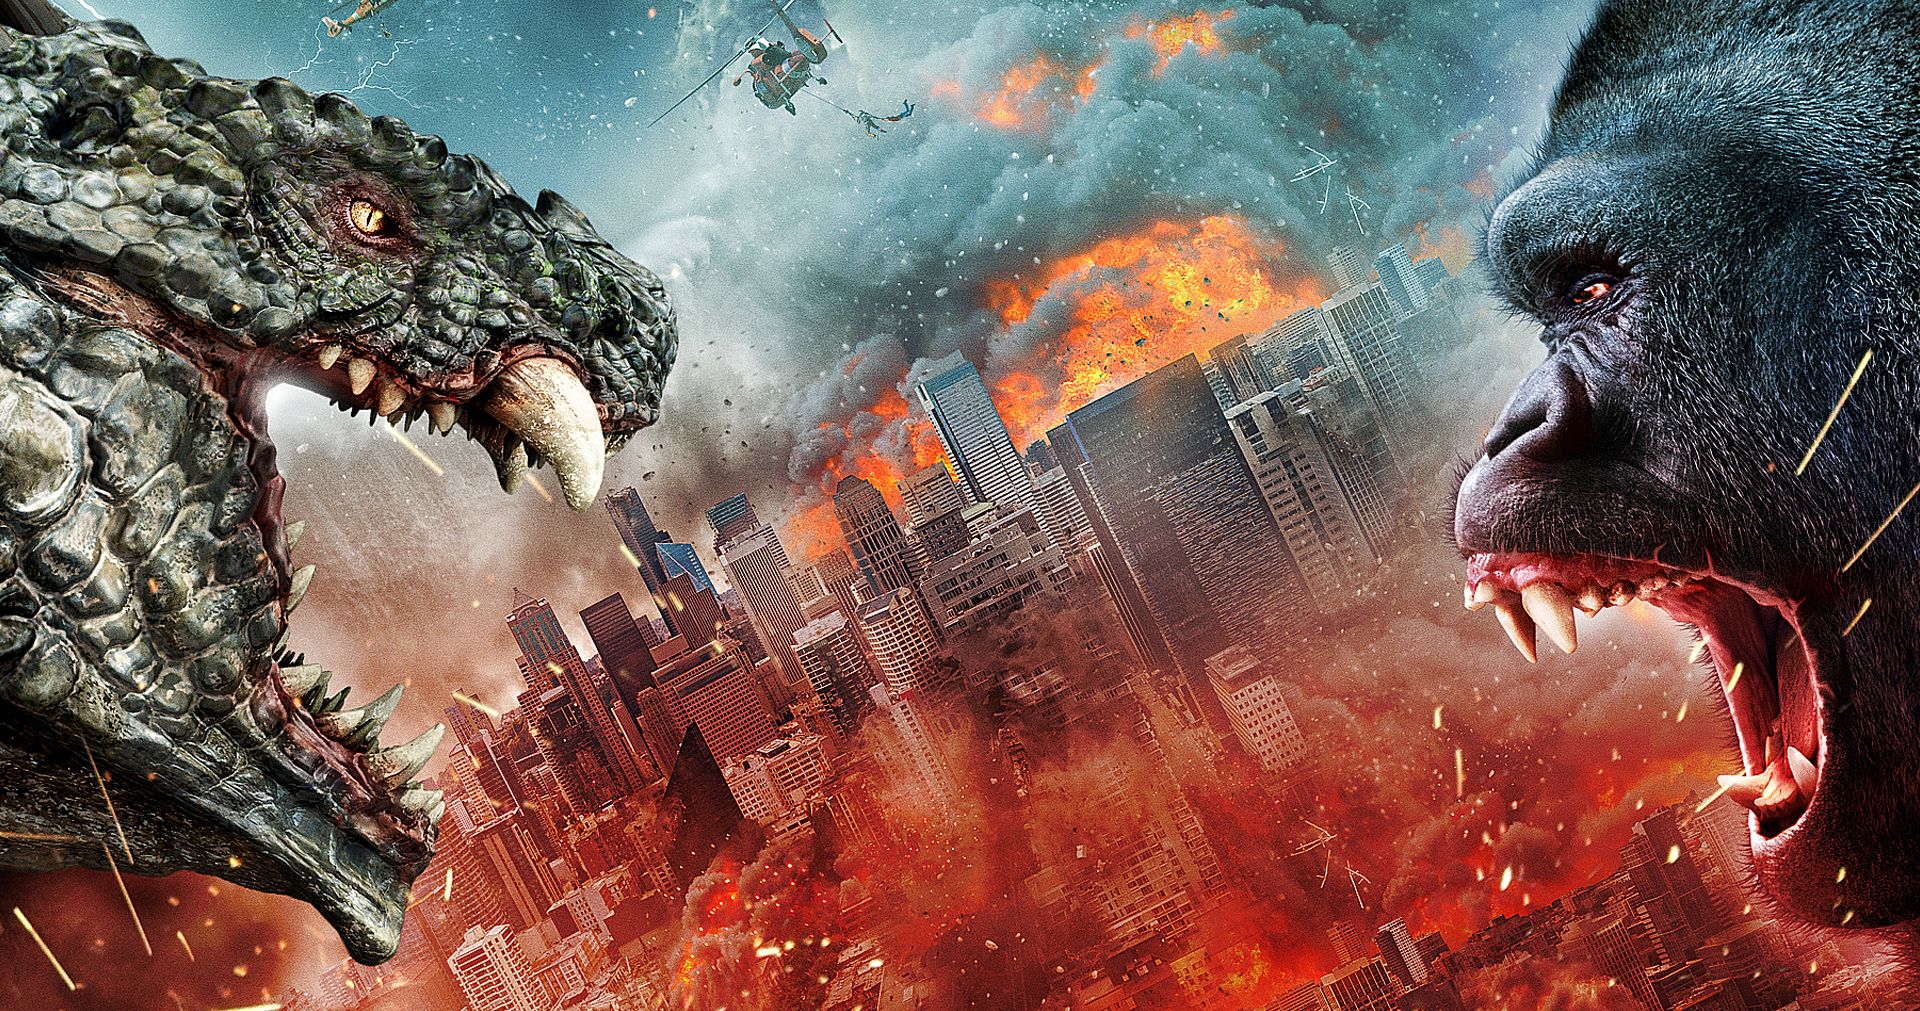 Ape Vs. Monster Trailer Gives Godzilla Vs. Kong the Mockbuster Treatment